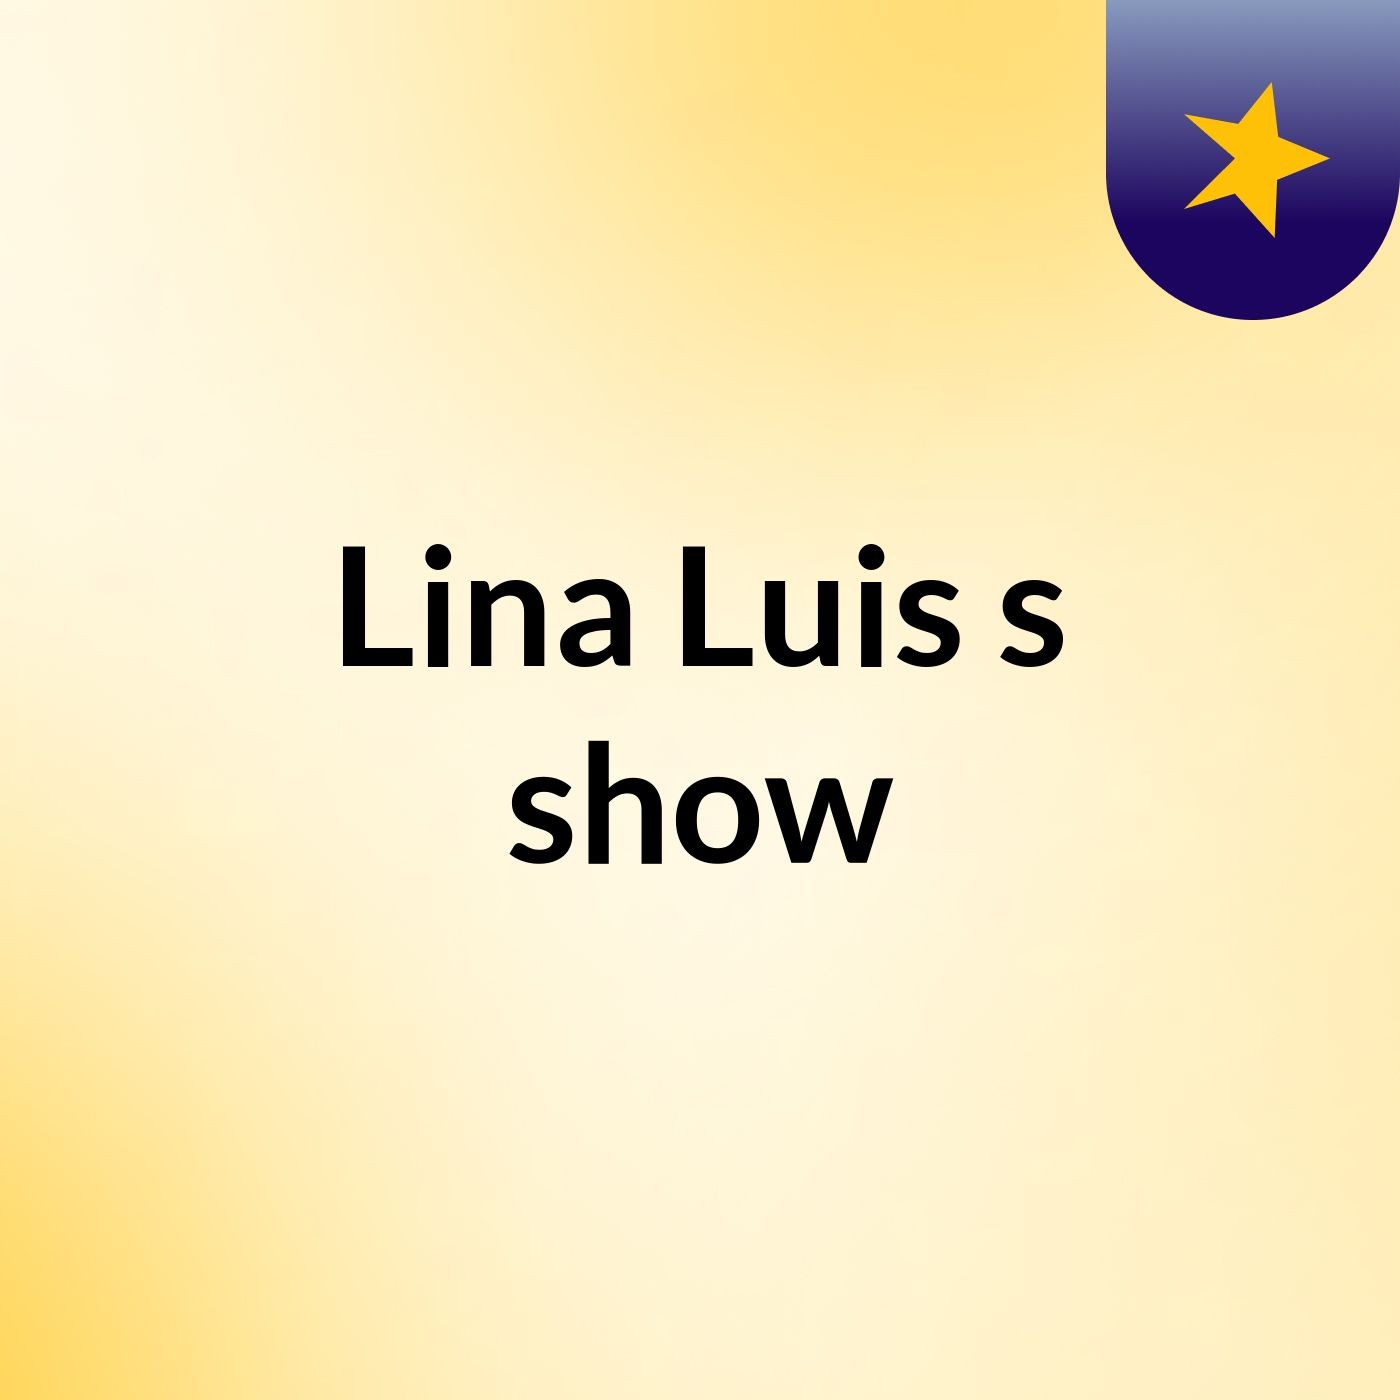 Lina Luis's show